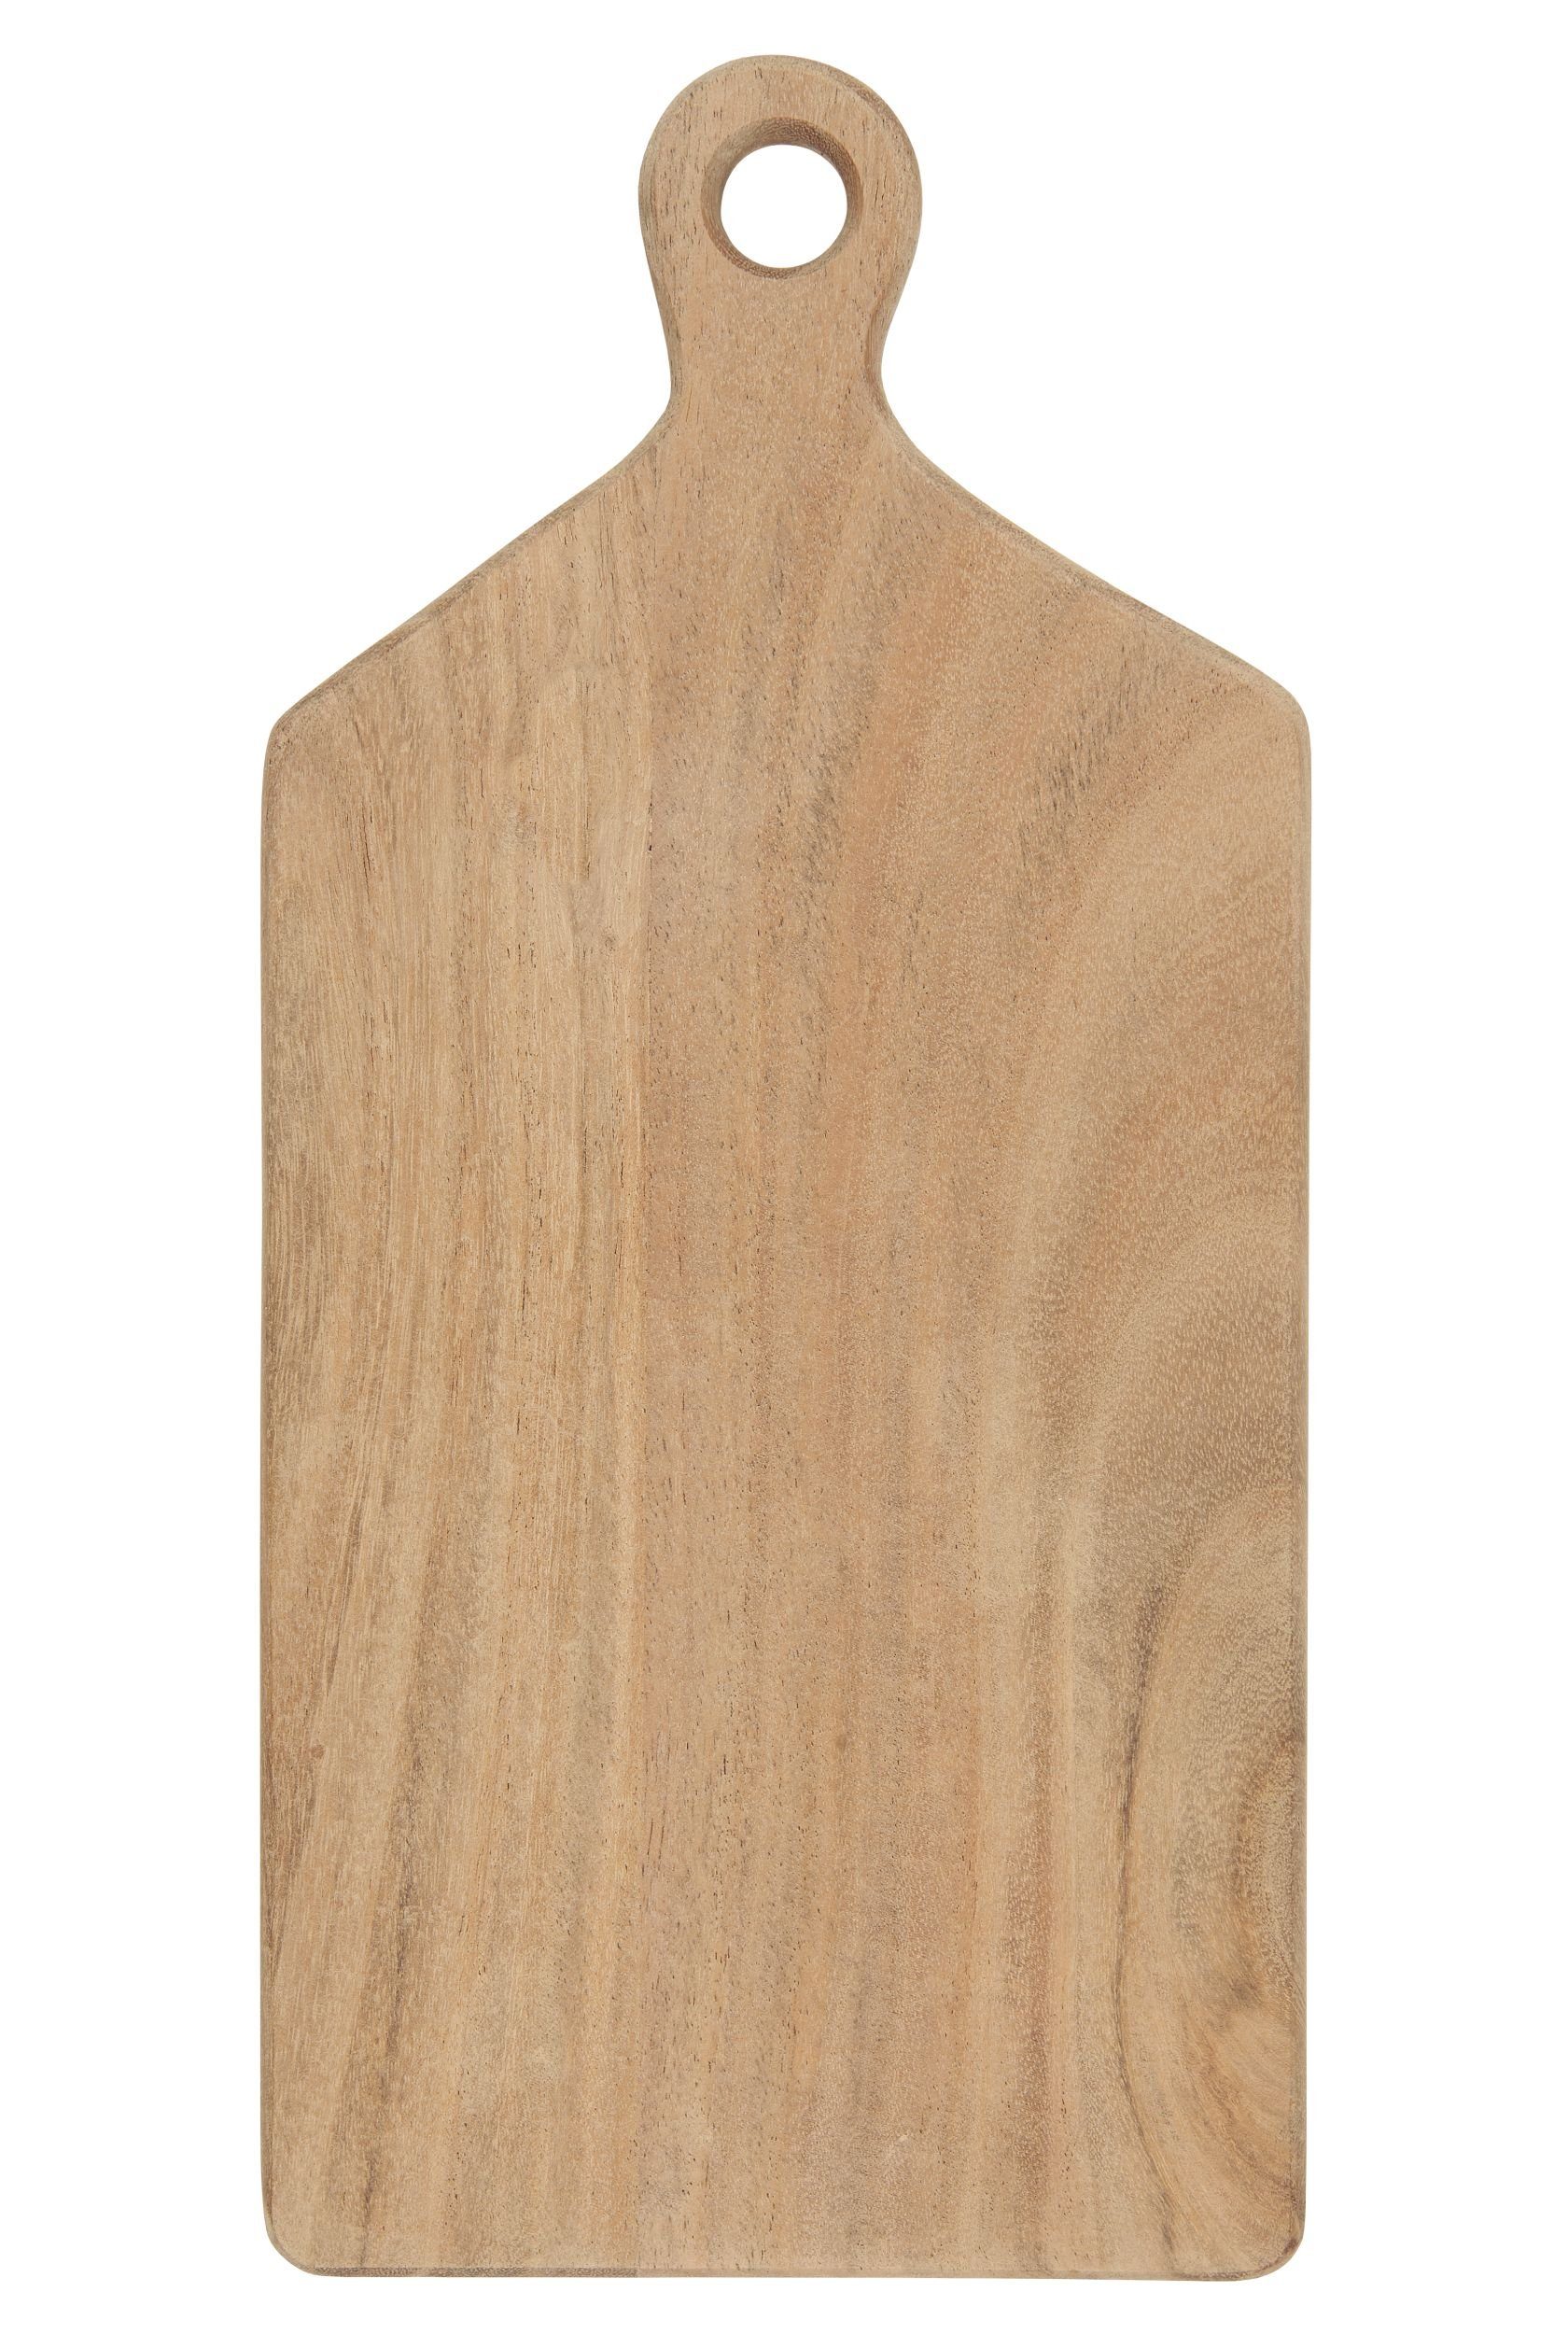 Ib Laursen Servierbrett Schneidebrett Servierbrett Brettchen Holz mit Griff 17x35cm Ib | Servierbretter